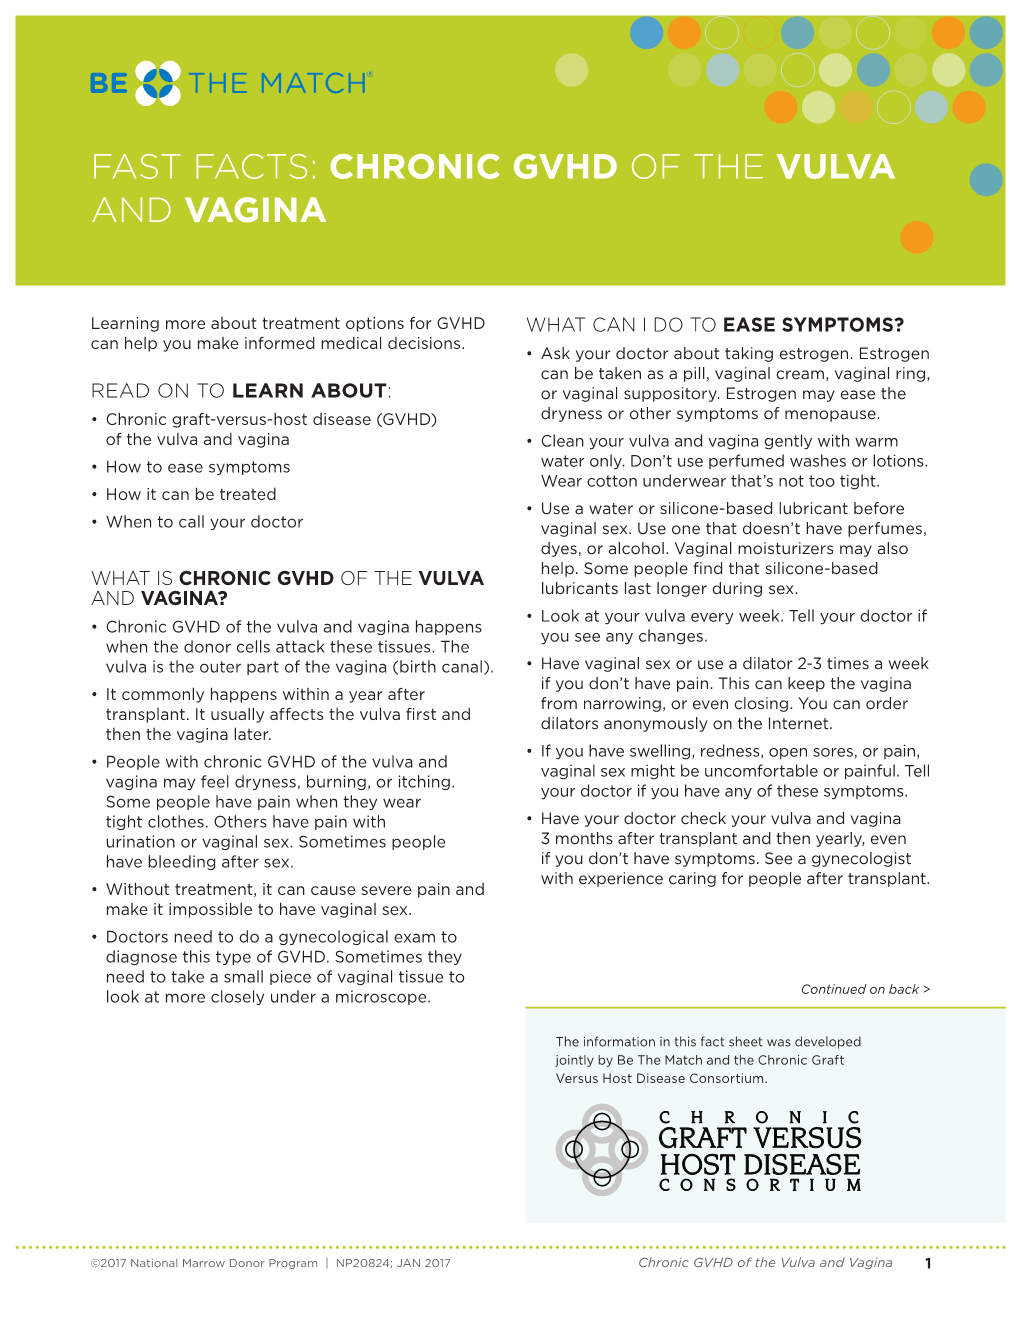 Chronic Gvhd of the Vulva and Vagina